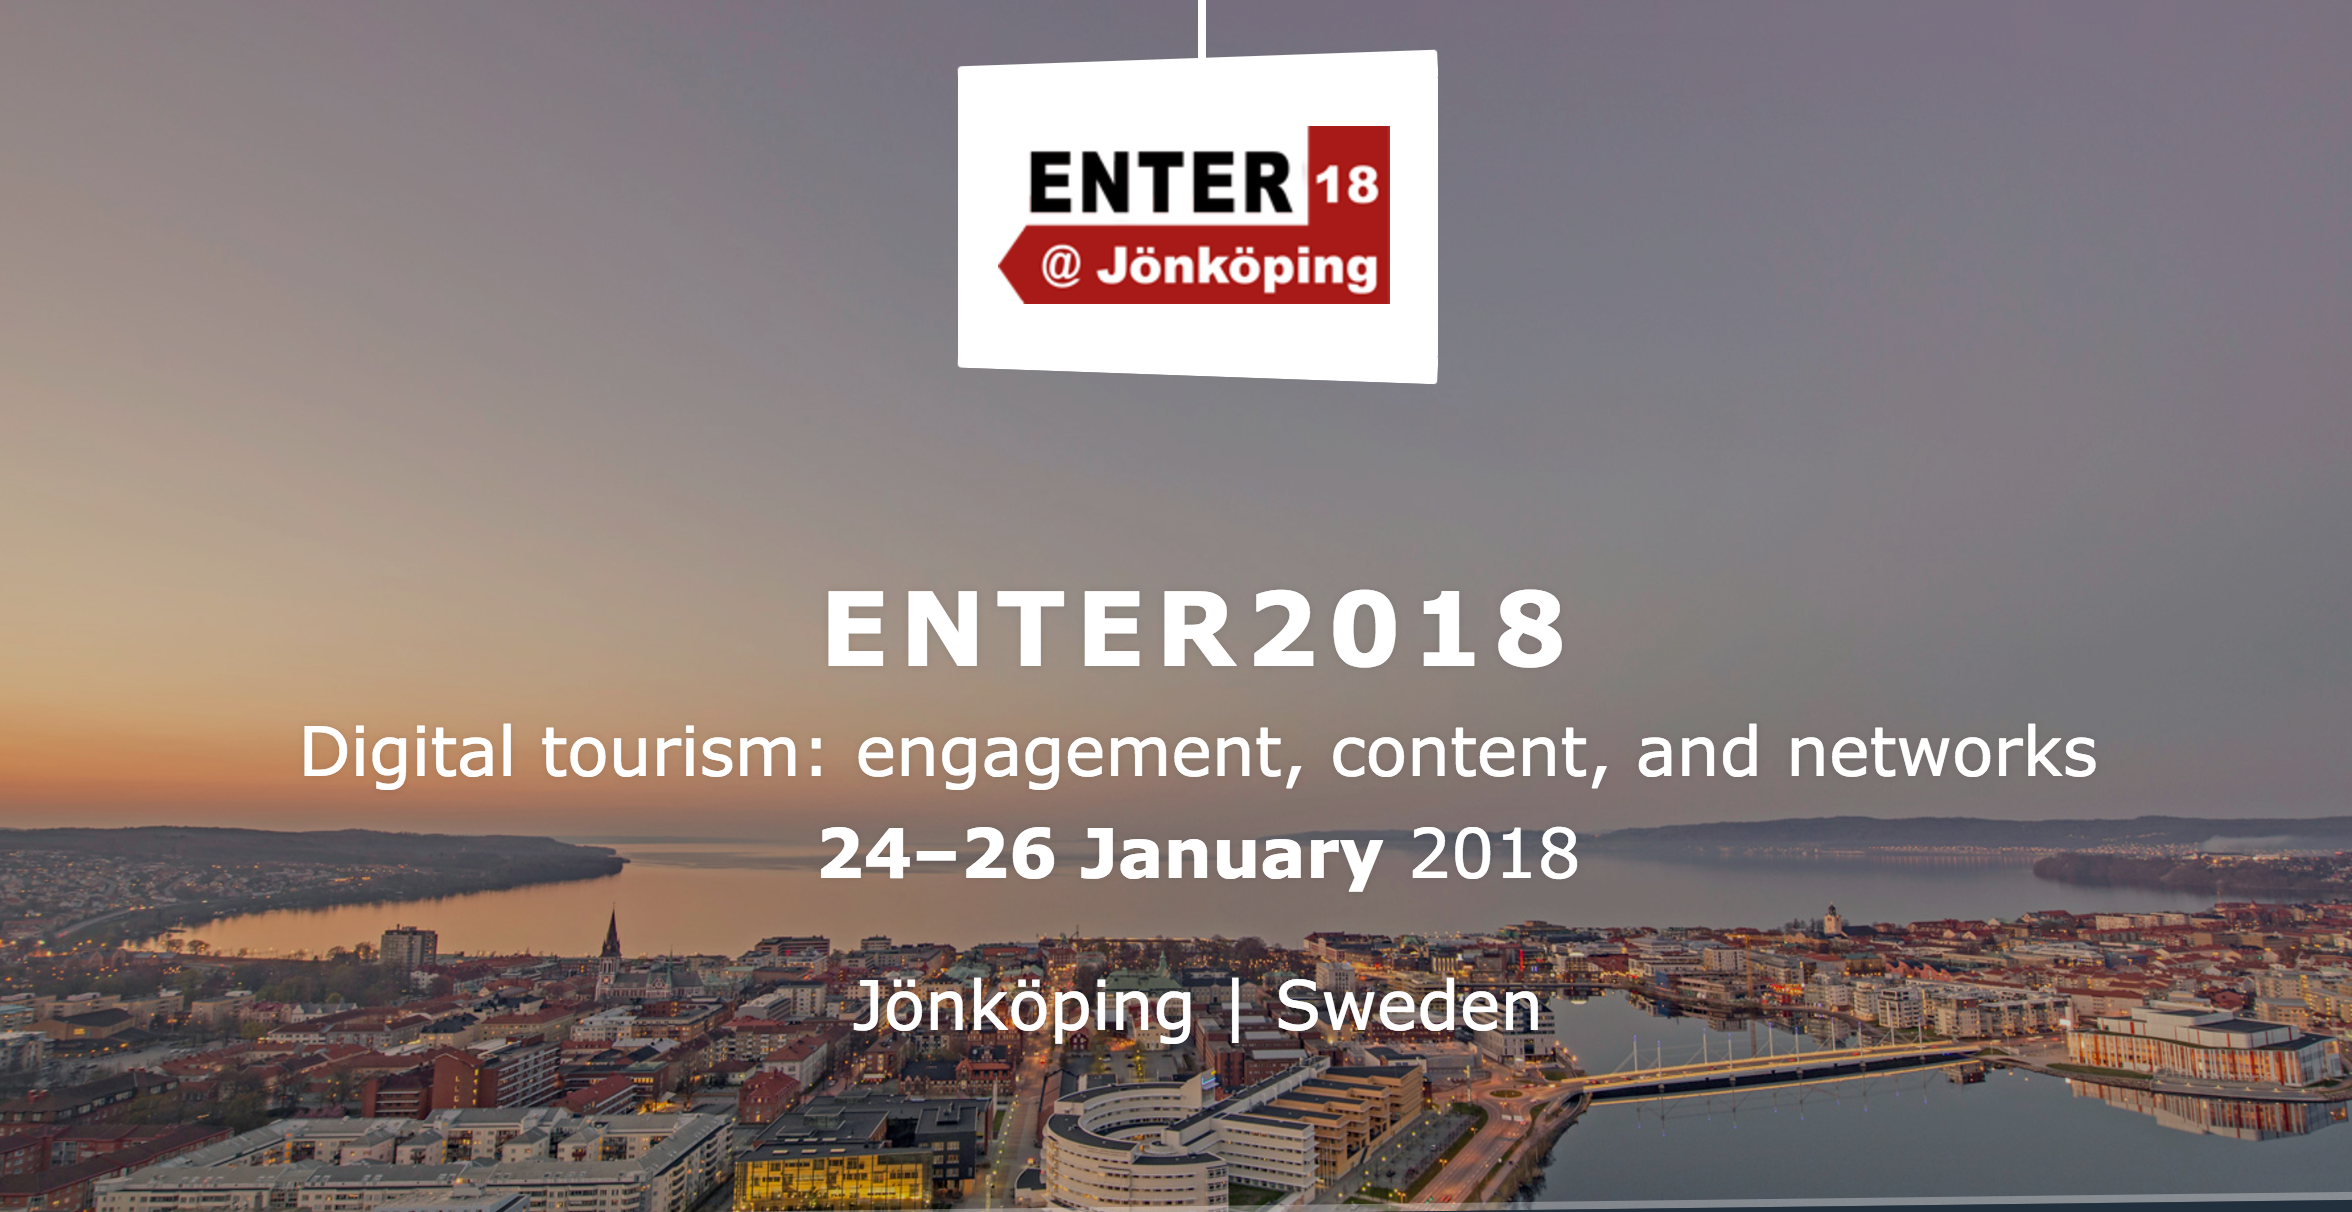 IFITT’s ICT4D Scholarship to attend ENTER2018 eTourism Conference in Jönköping, Sweden